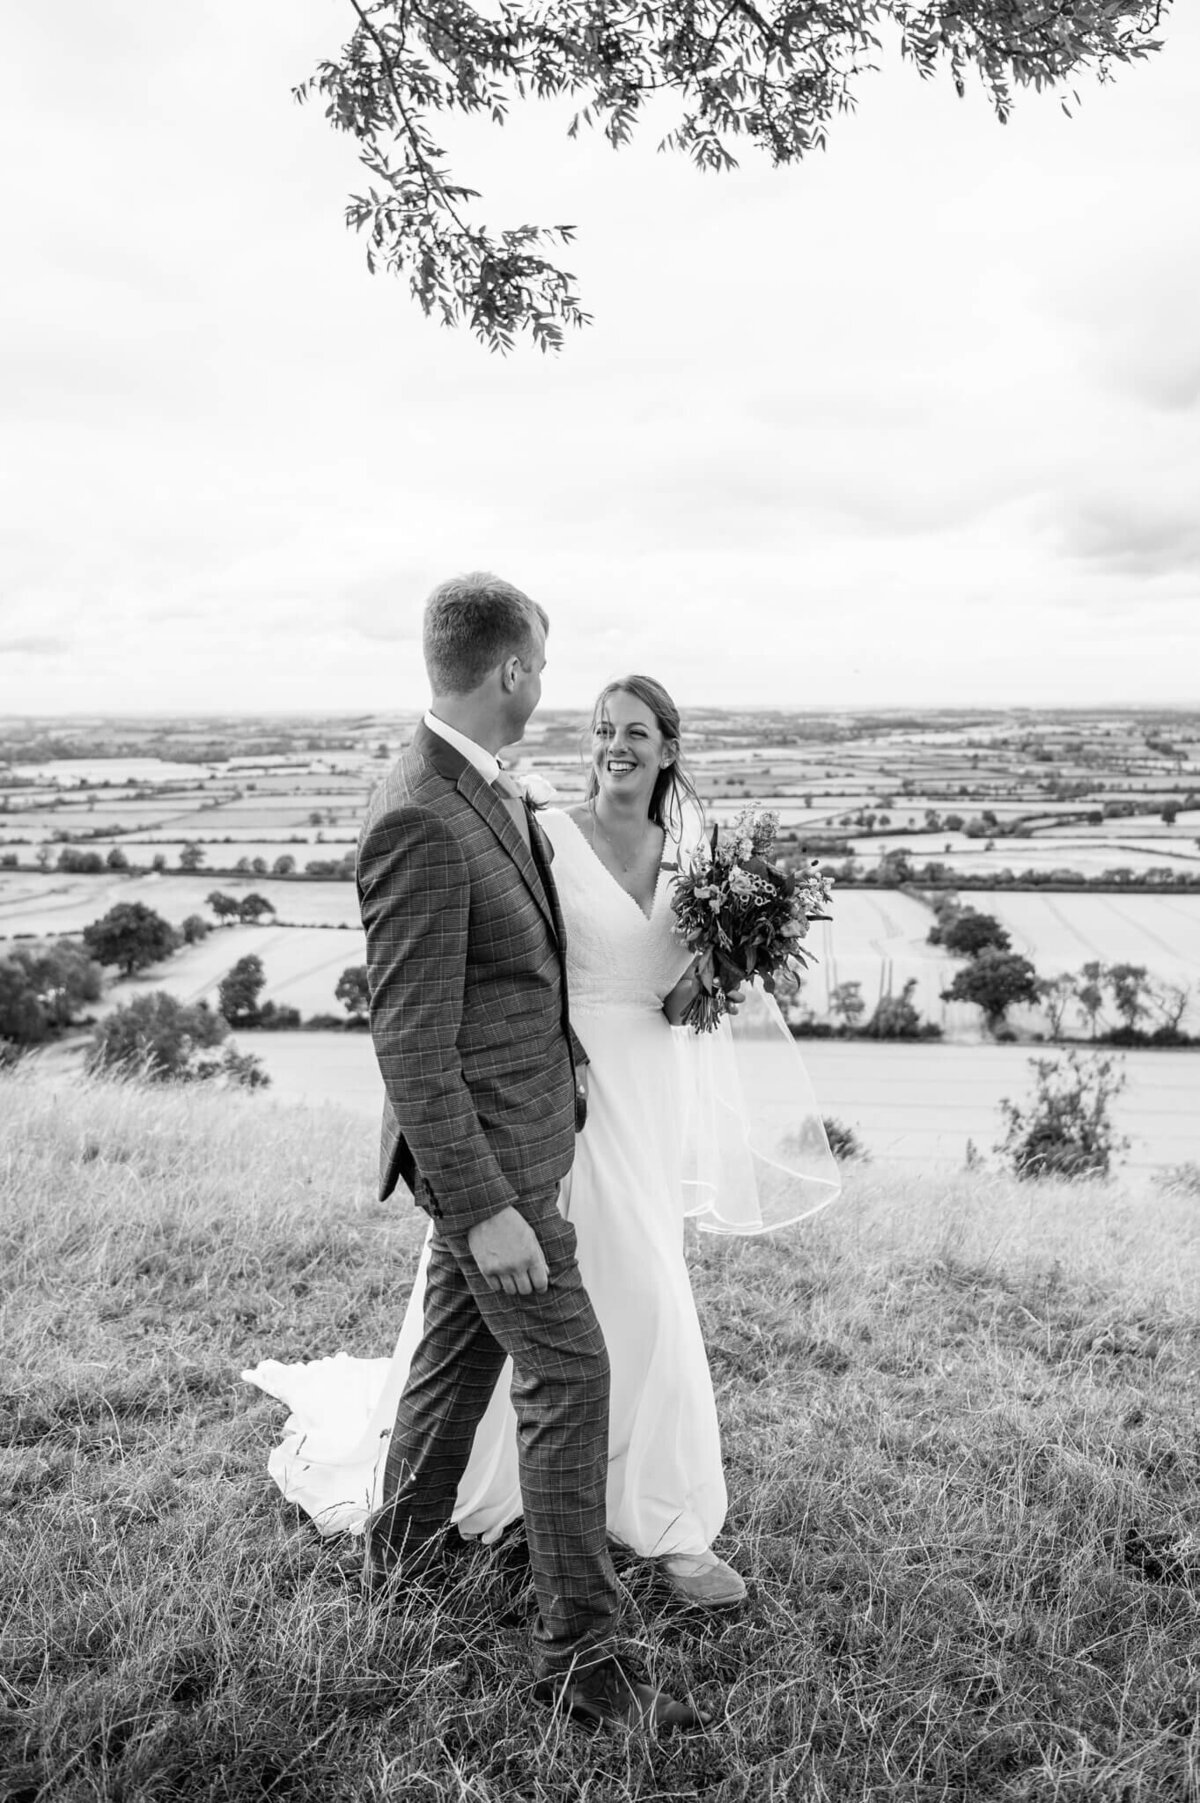 Chloe Bolam - Buckinghamshire Warwickshire UK Wedding Photographer - Marquee Outdoor Wedding - C & S - 23.07.22 -3